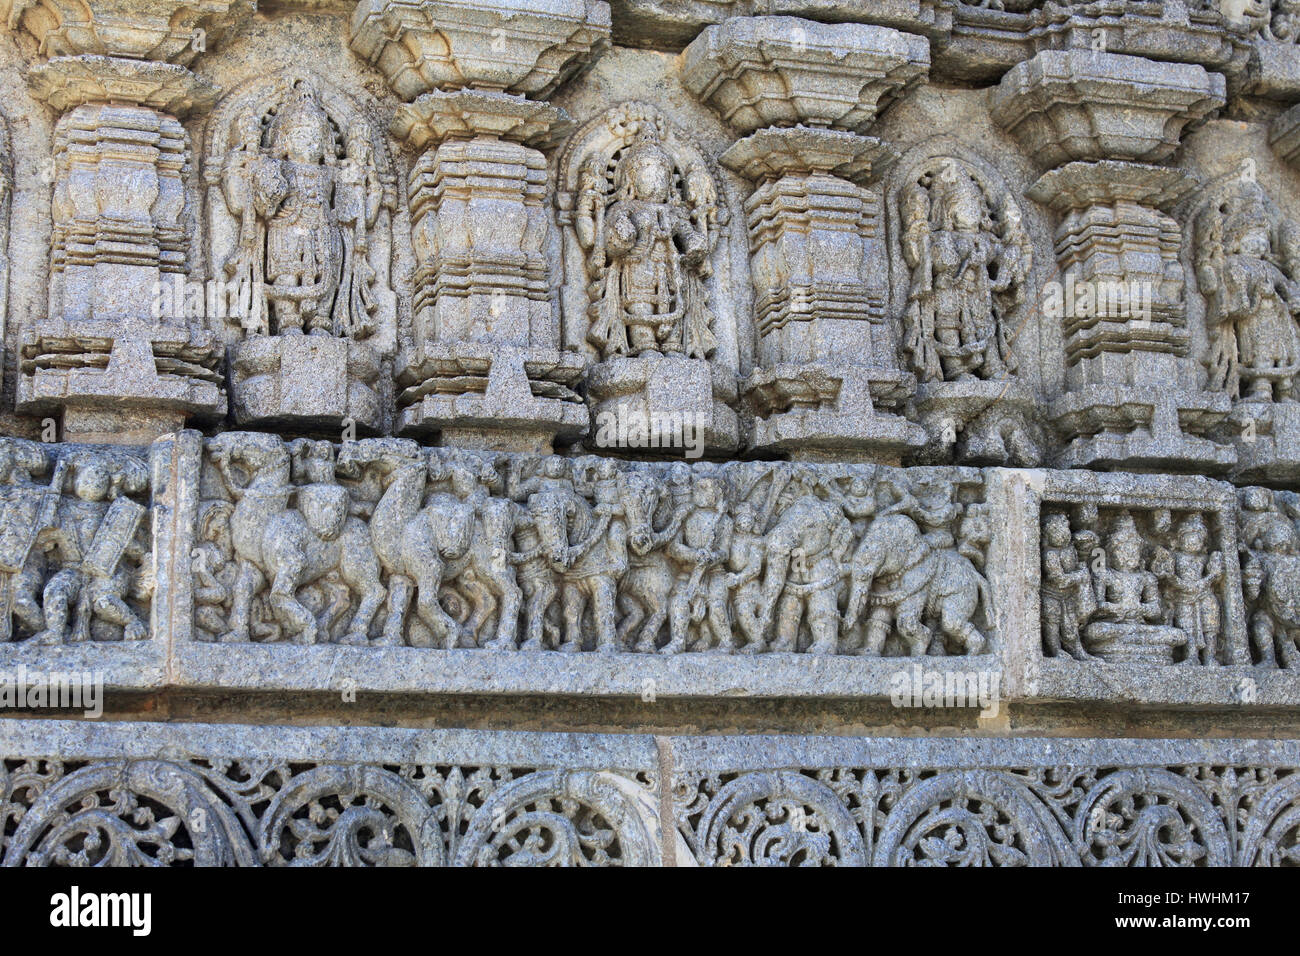 Stone sculptures of deities, panel below depicting stories, Chennakesava Temple, Hoysala Architecture exterior wall, Somnathpur, Karnataka, India Stock Photo